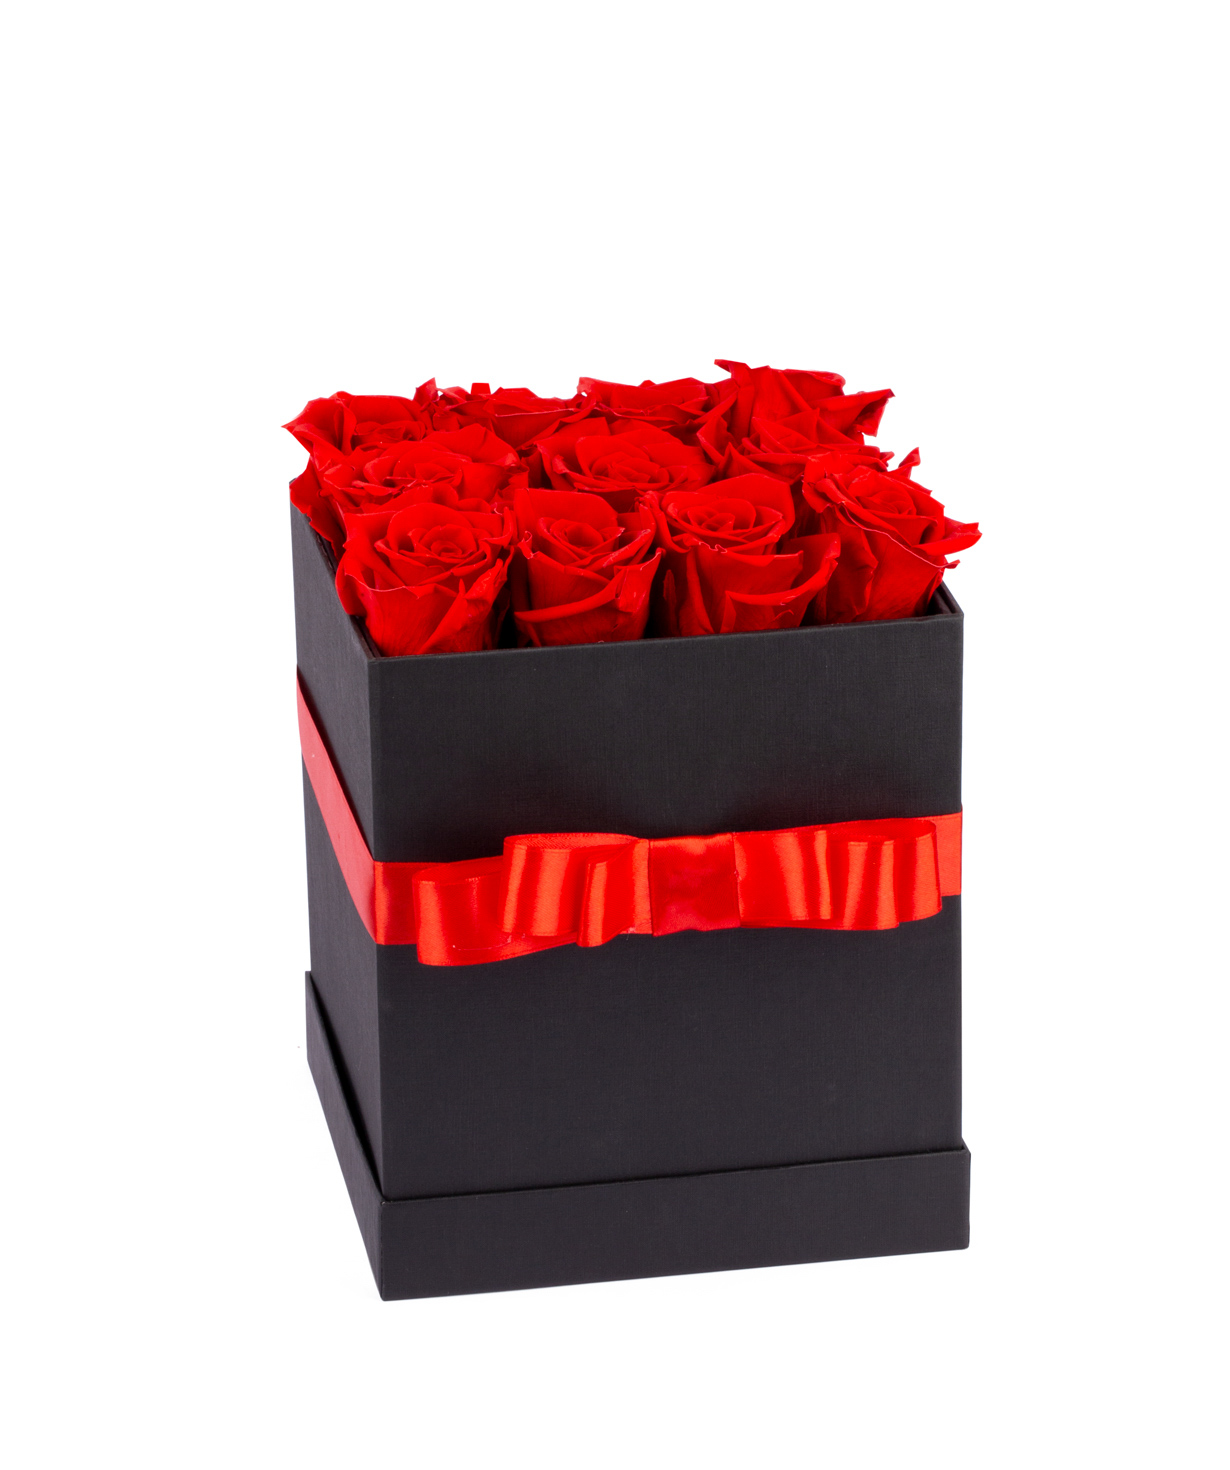 Arrangement `EM Flowers` with red eternal roses